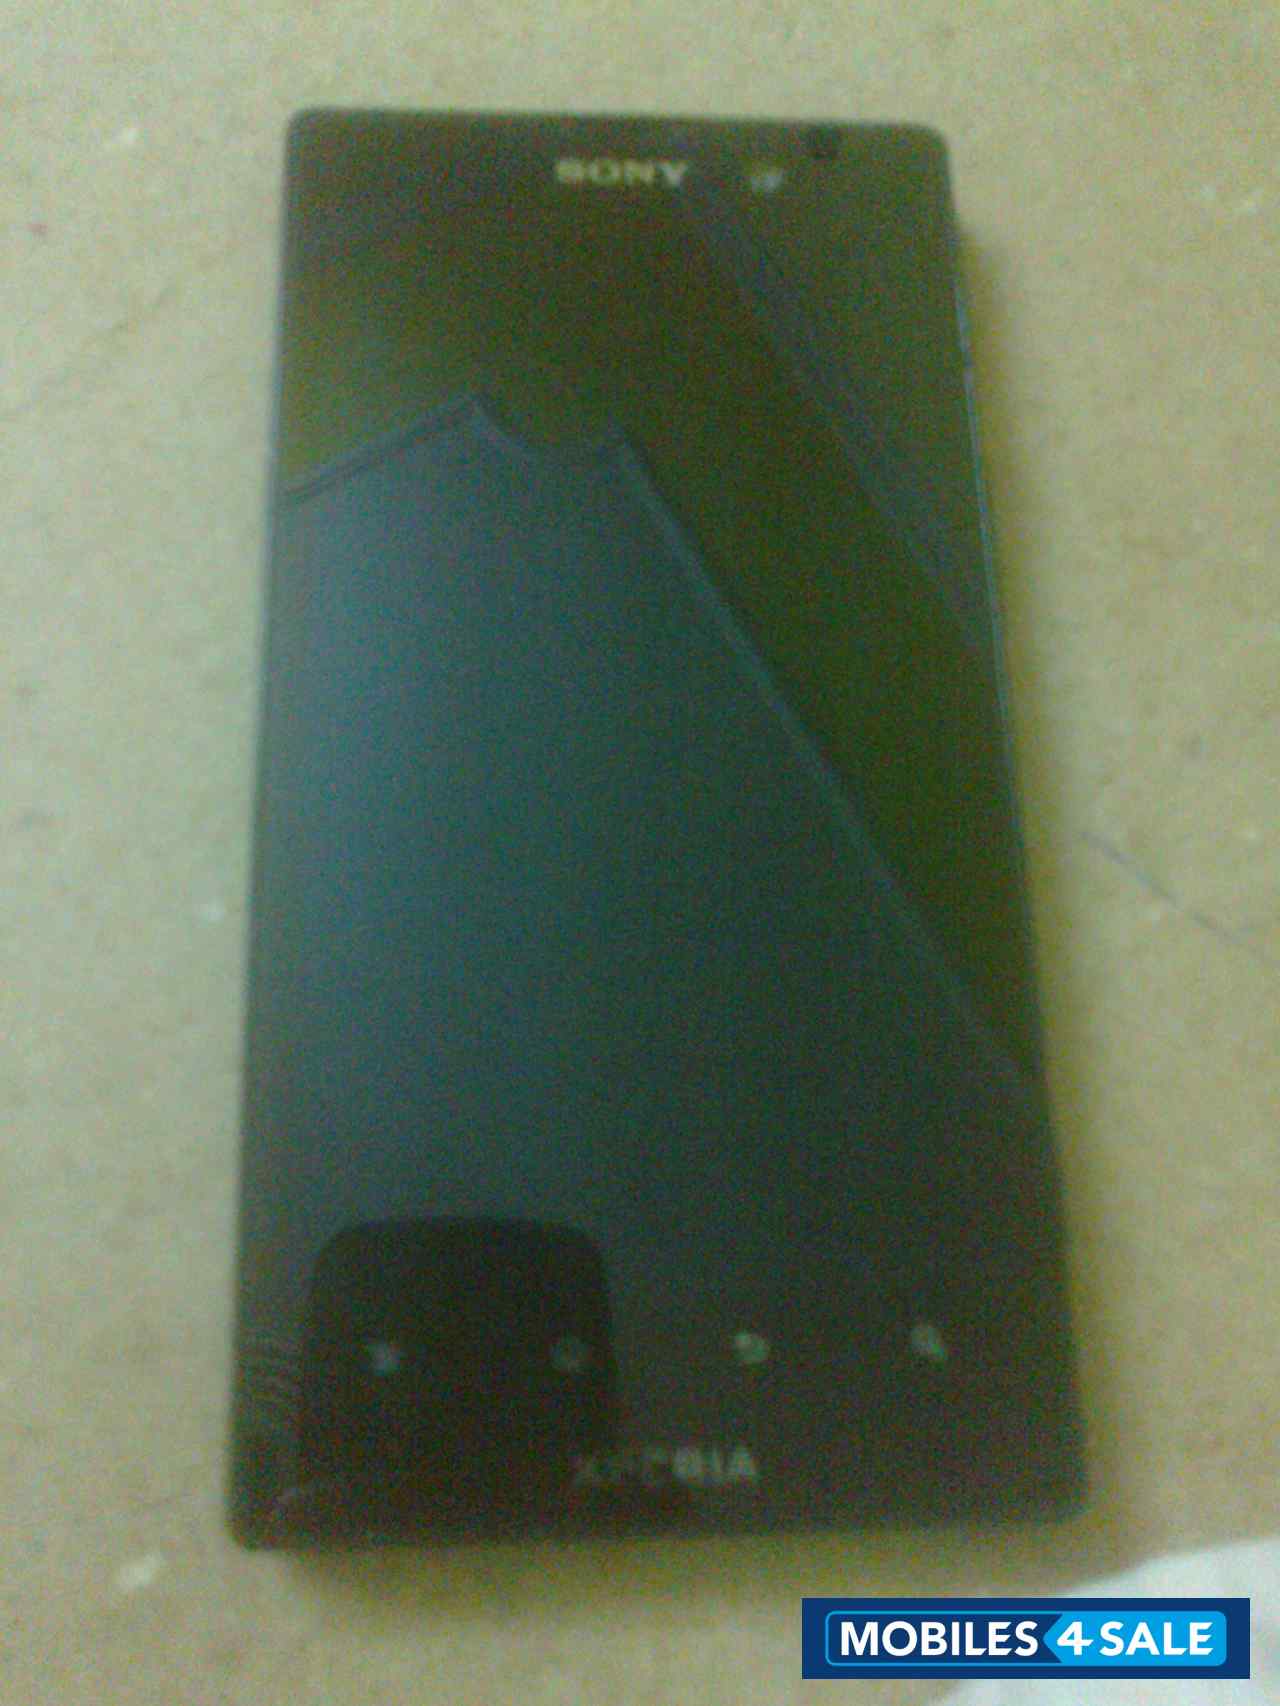 Black Sony Xperia ion